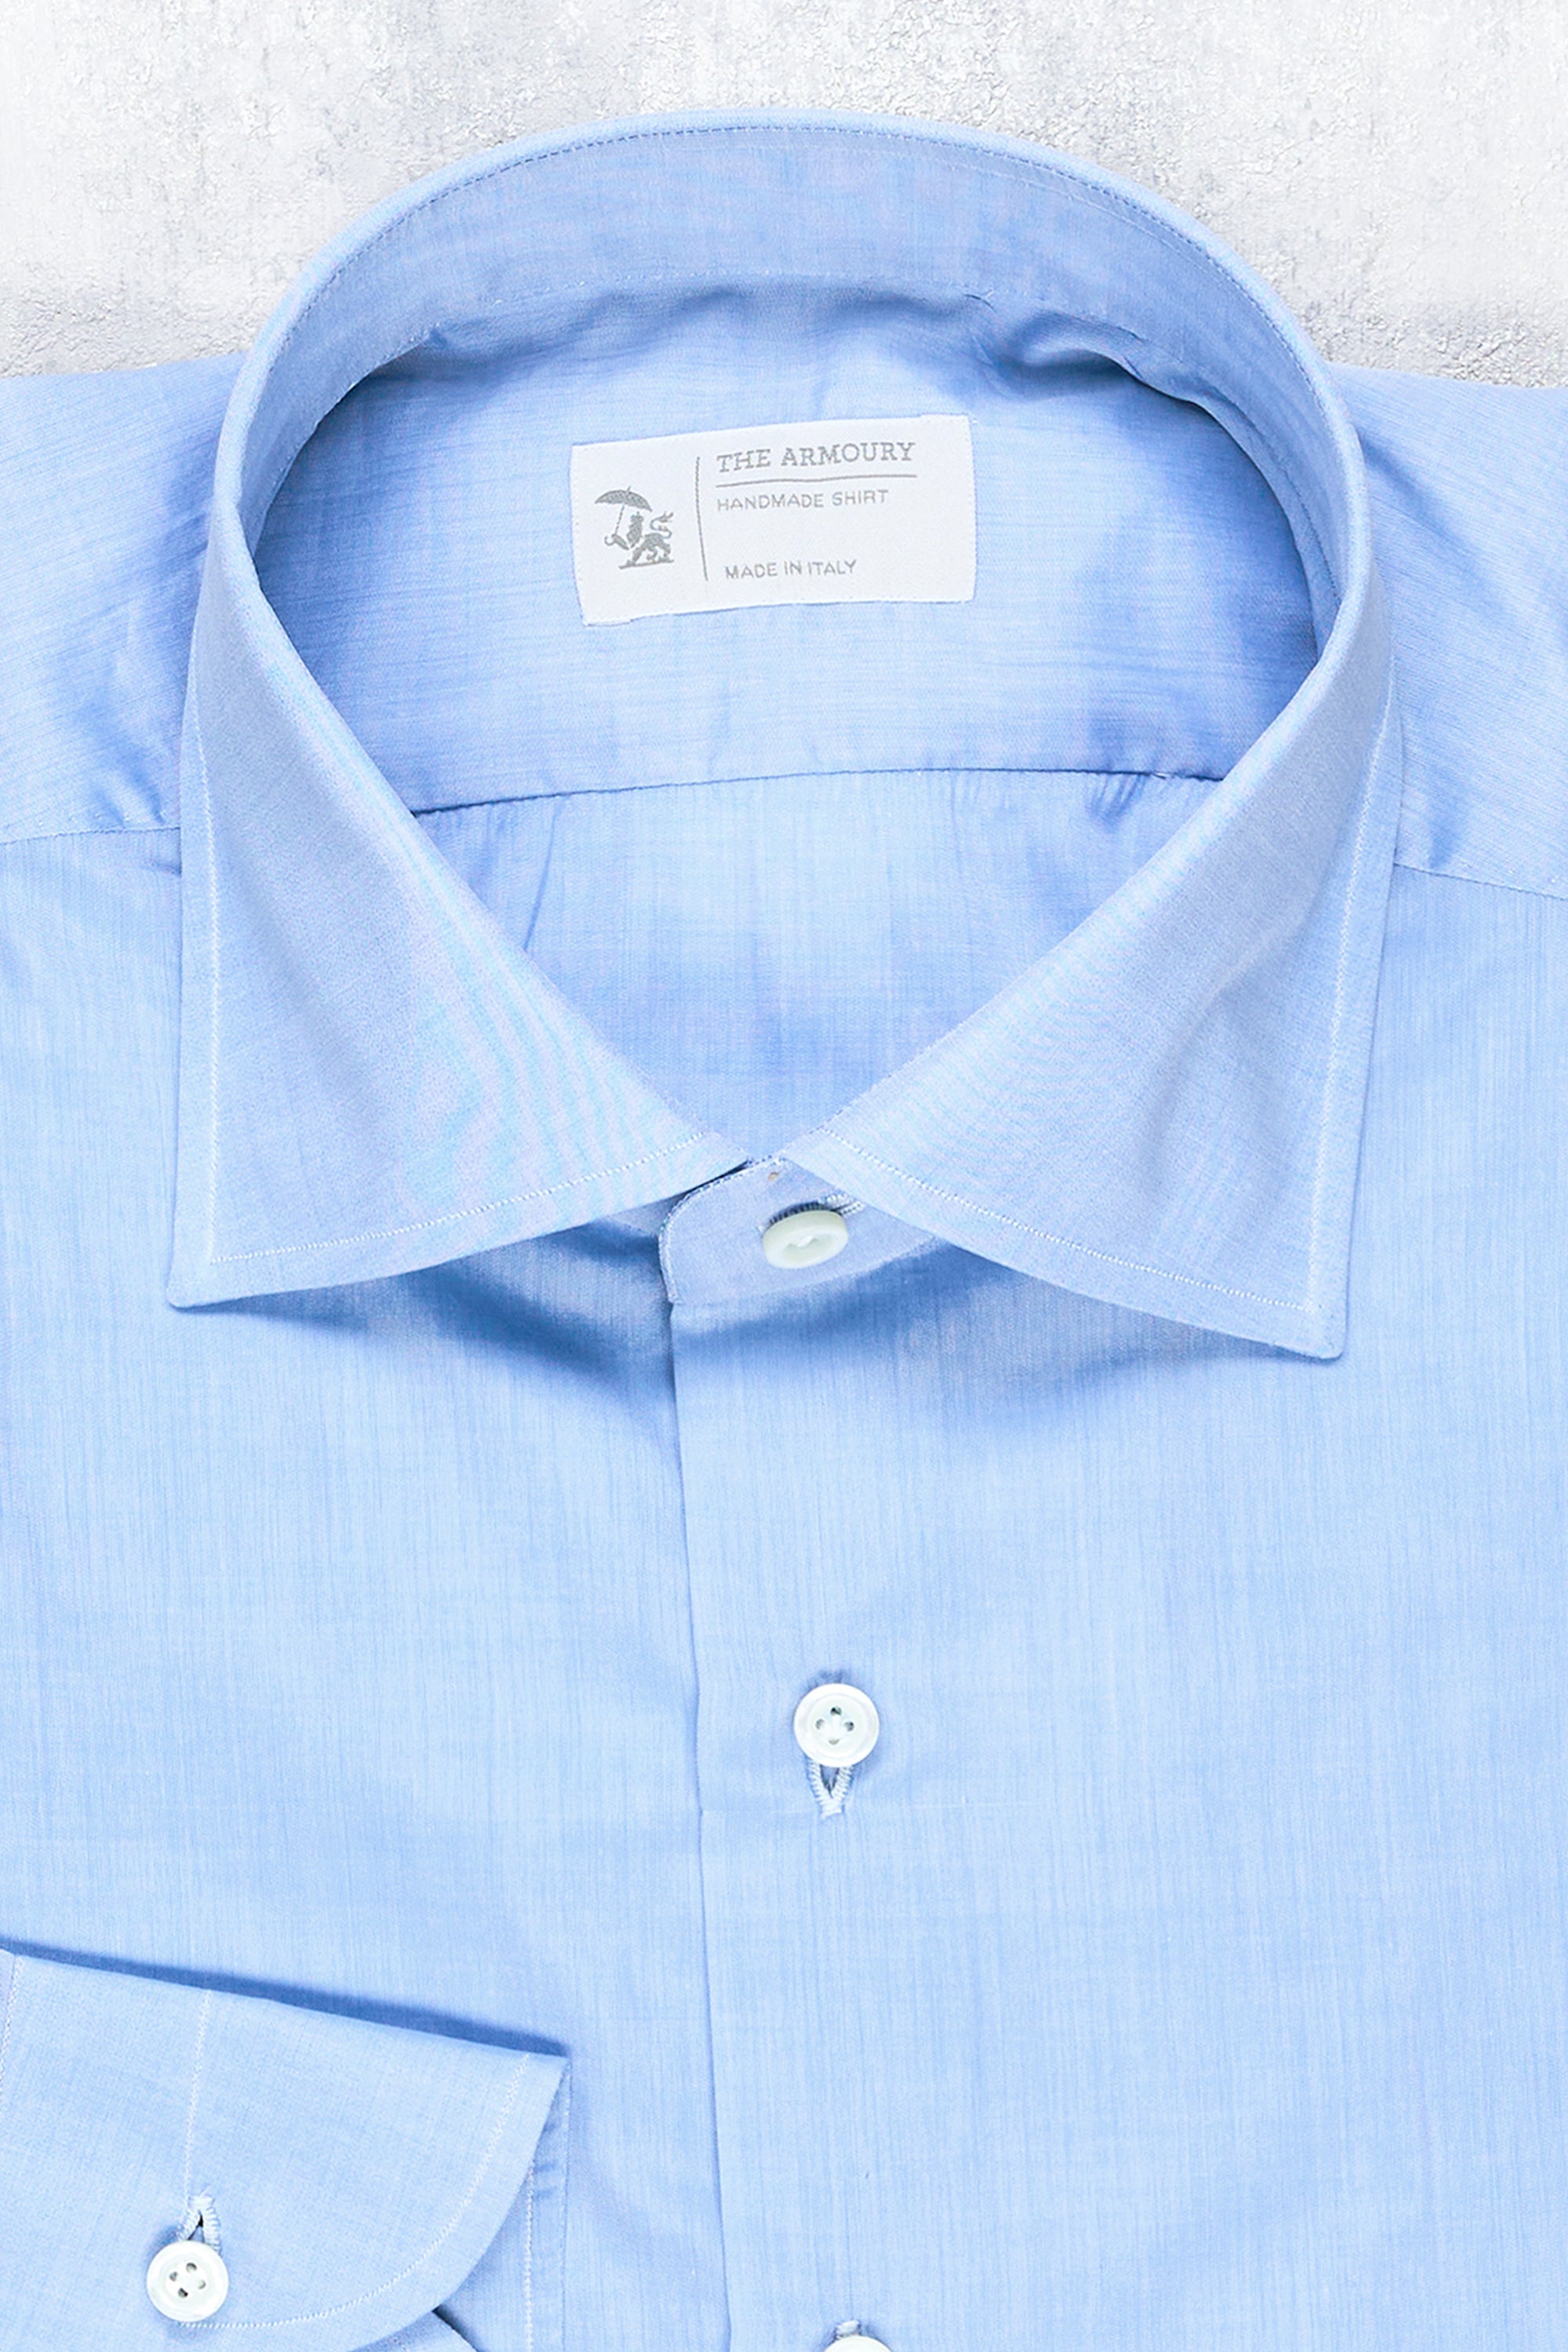 The Armoury Blue Cotton Spread Collar Shirt MTM